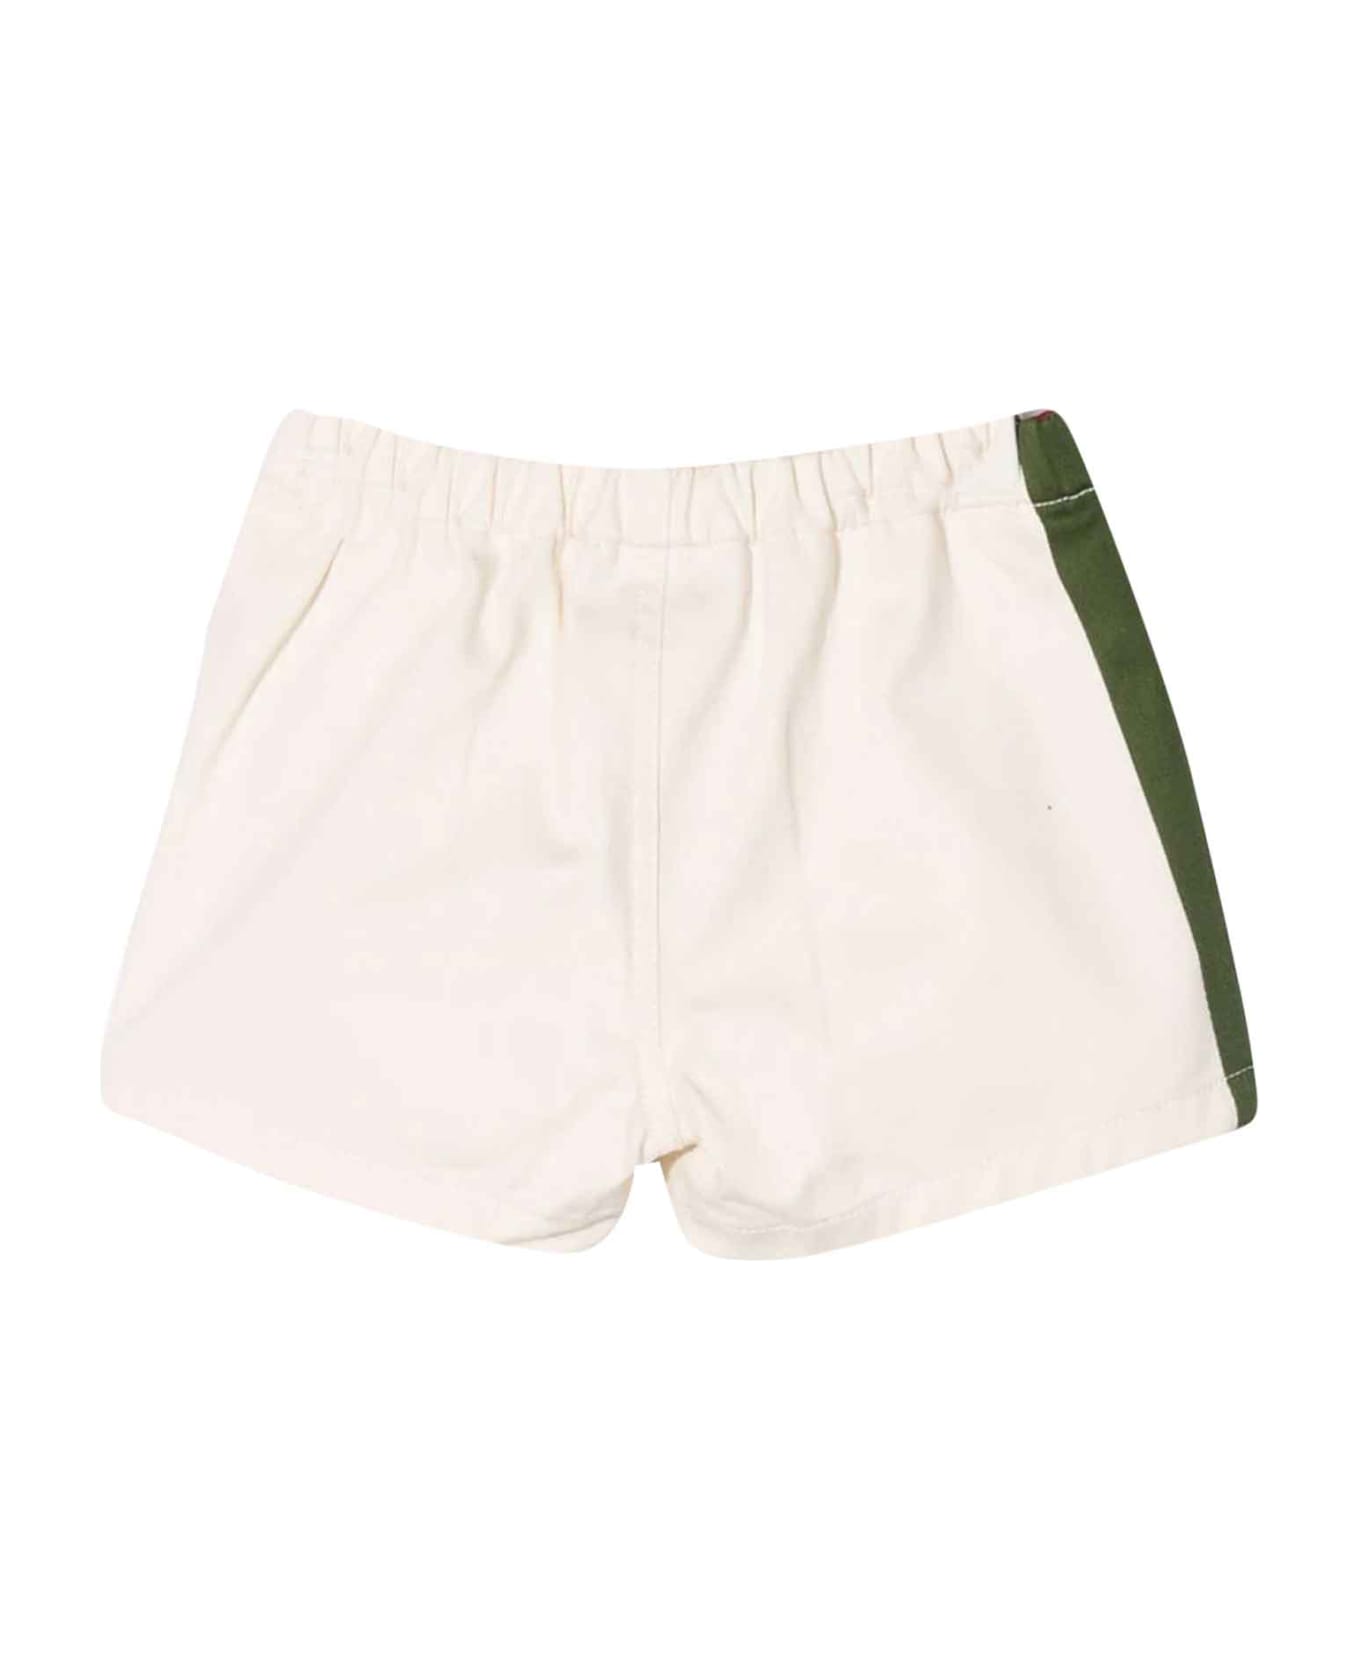 Gucci Unisex Newborn Bermuda Shorts - Bianco